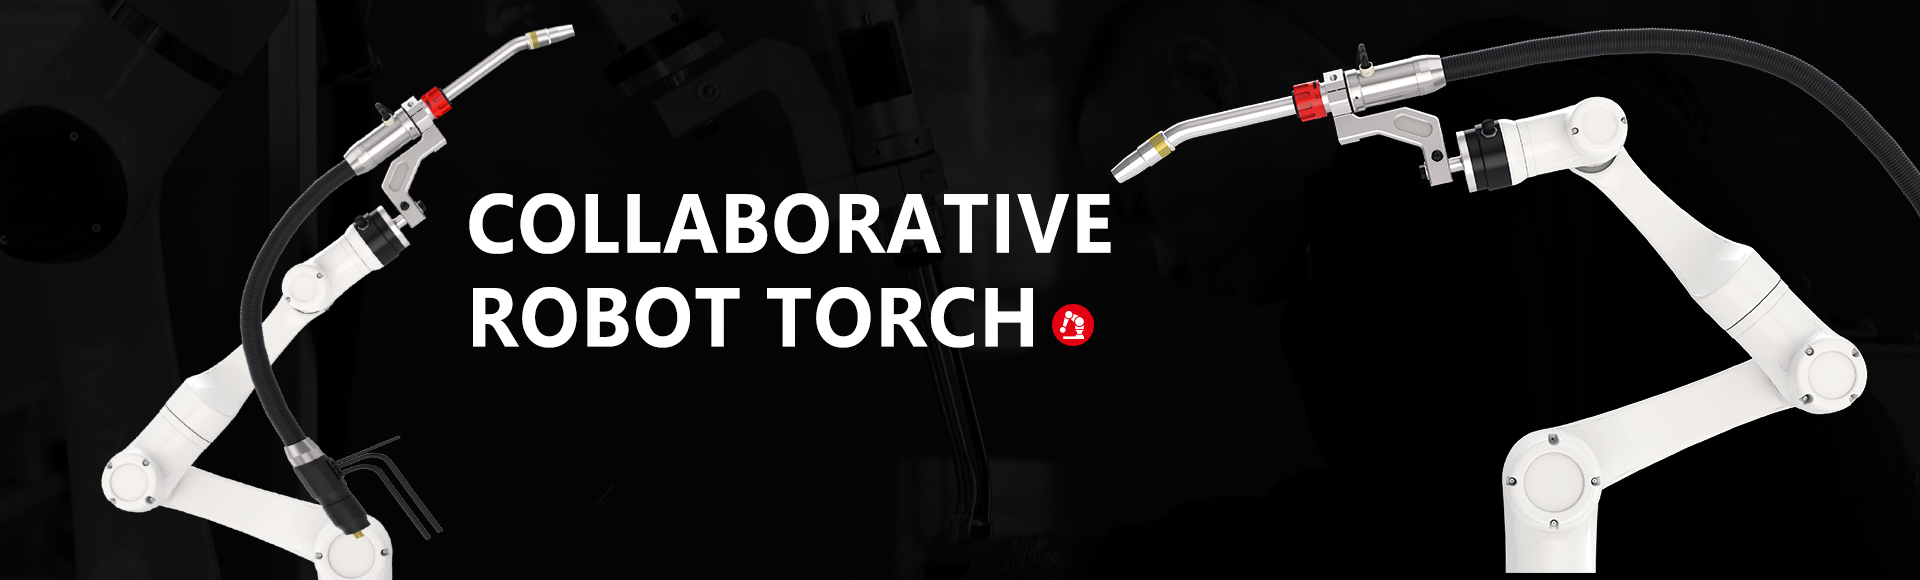 collaborative robot torch